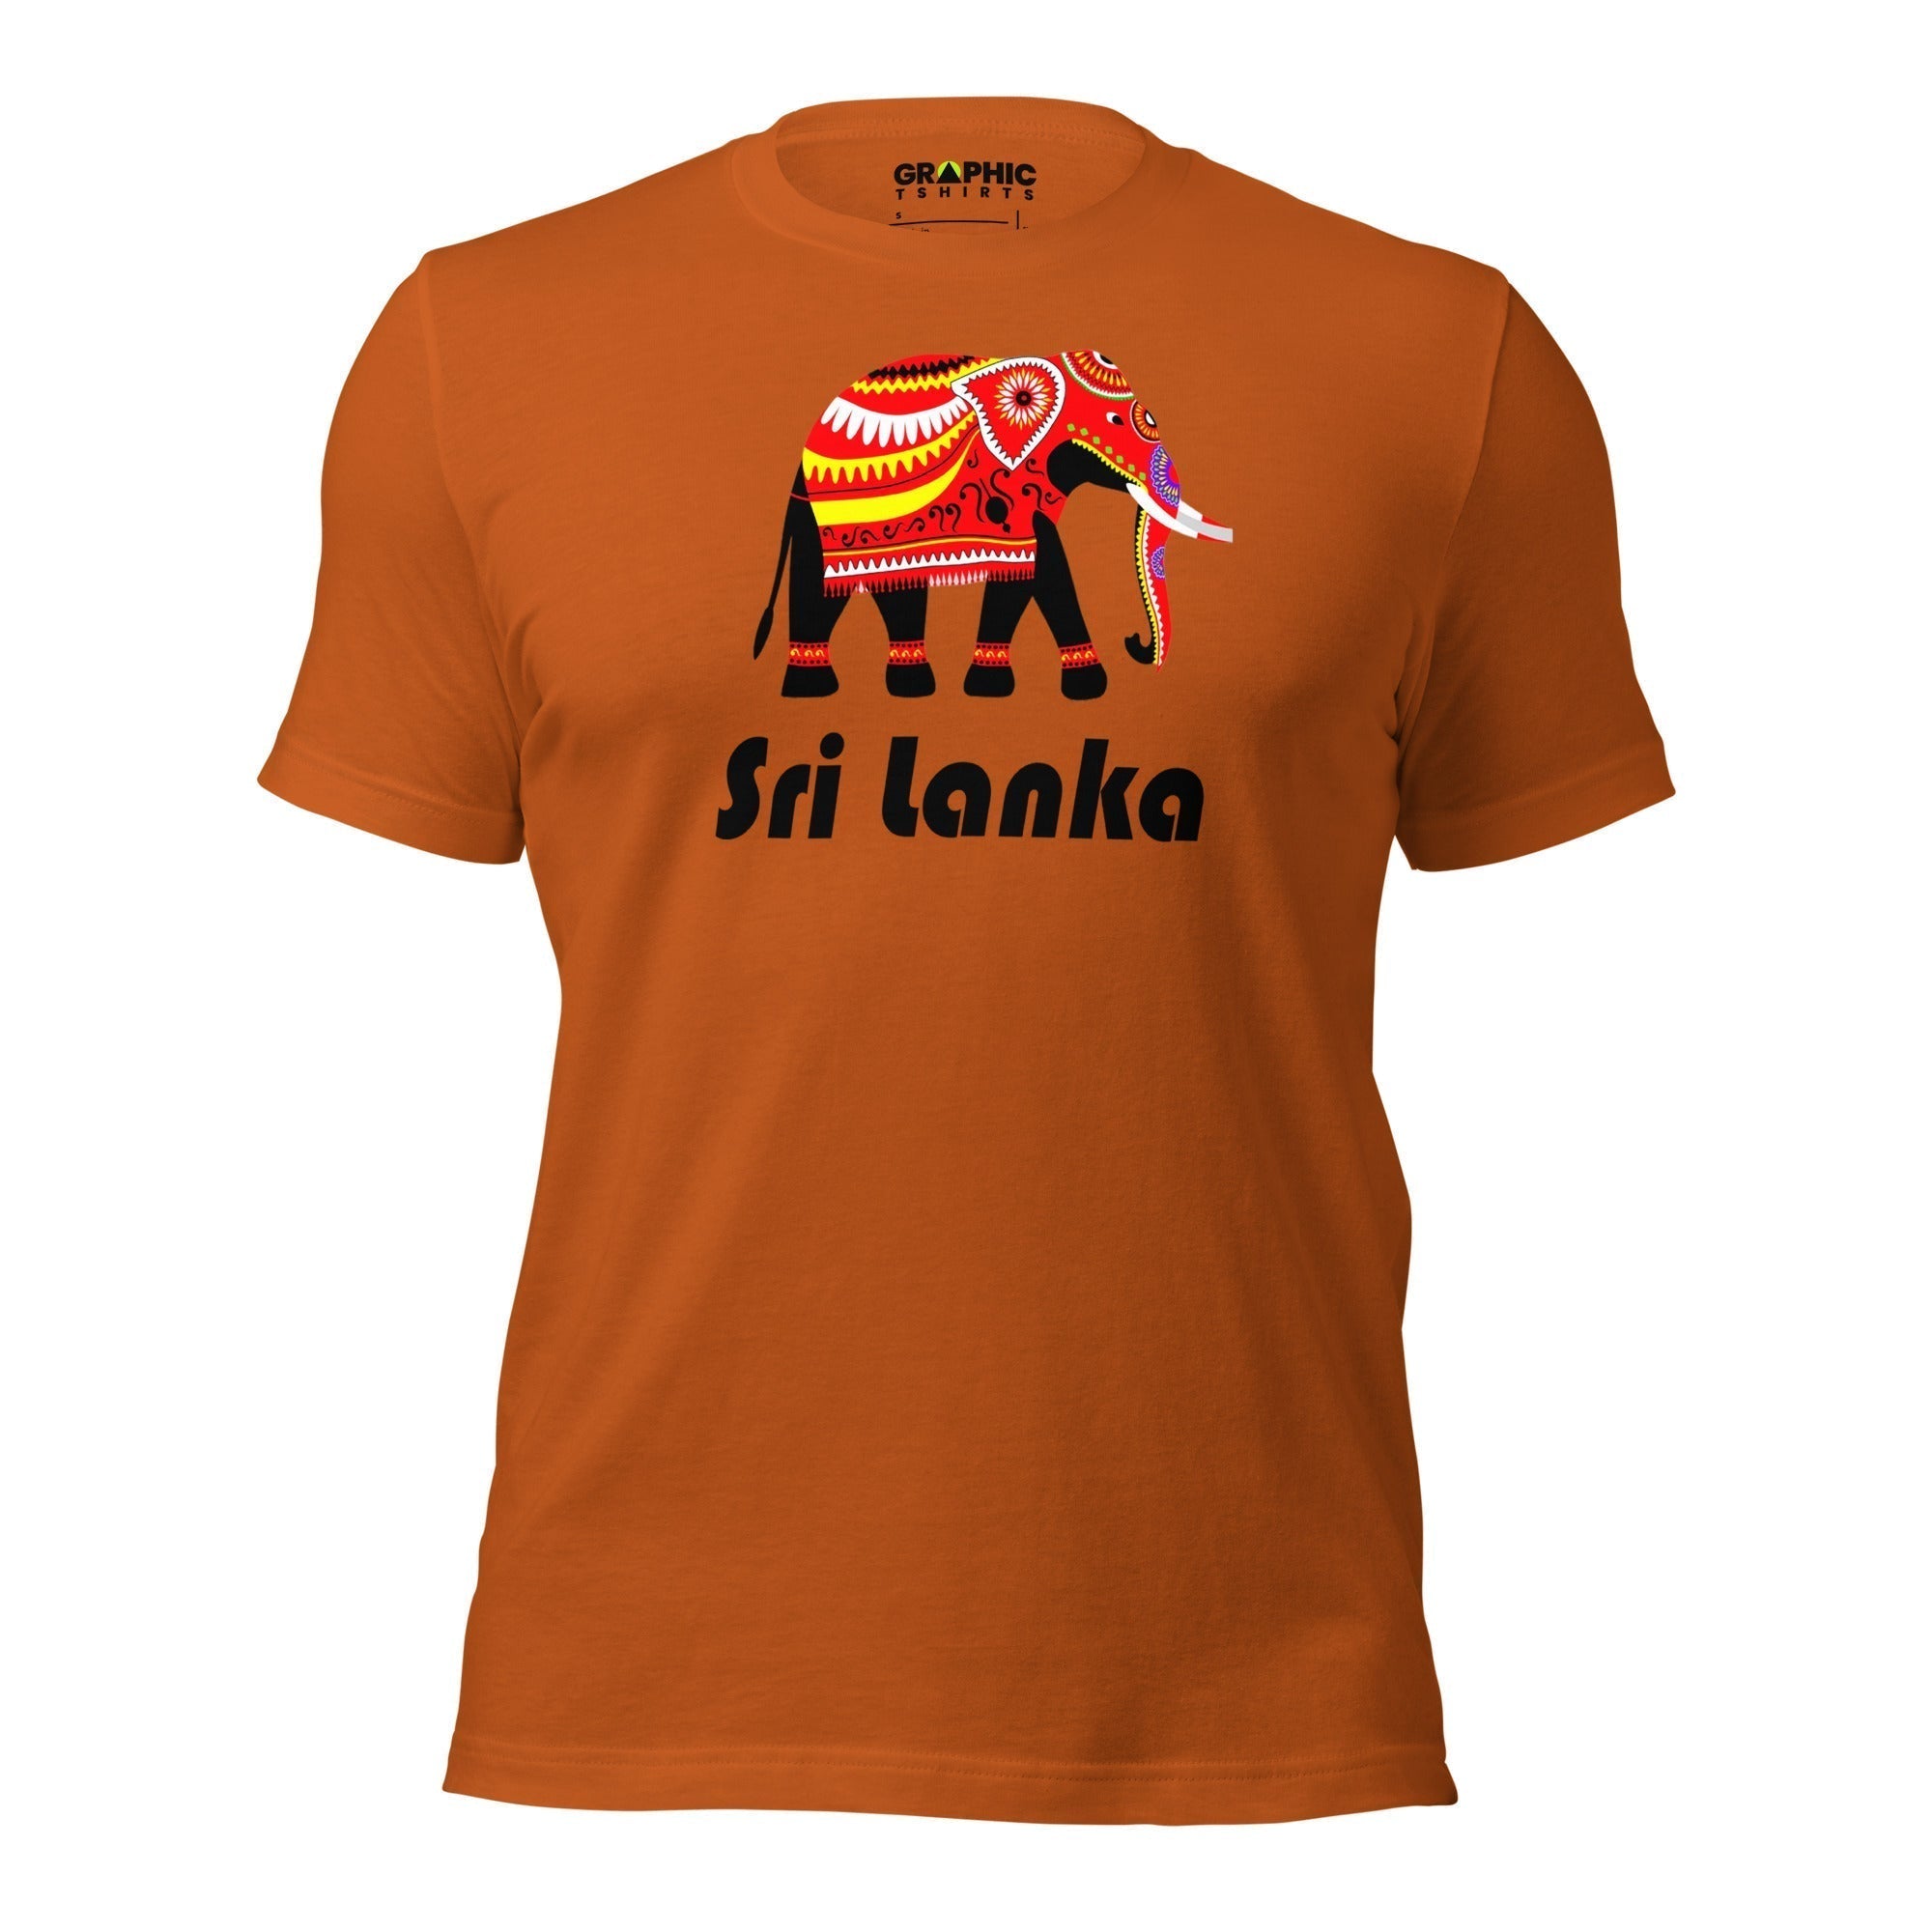 Unisex Staple T-Shirt - Sri Lanka Elephant - GRAPHIC T-SHIRTS